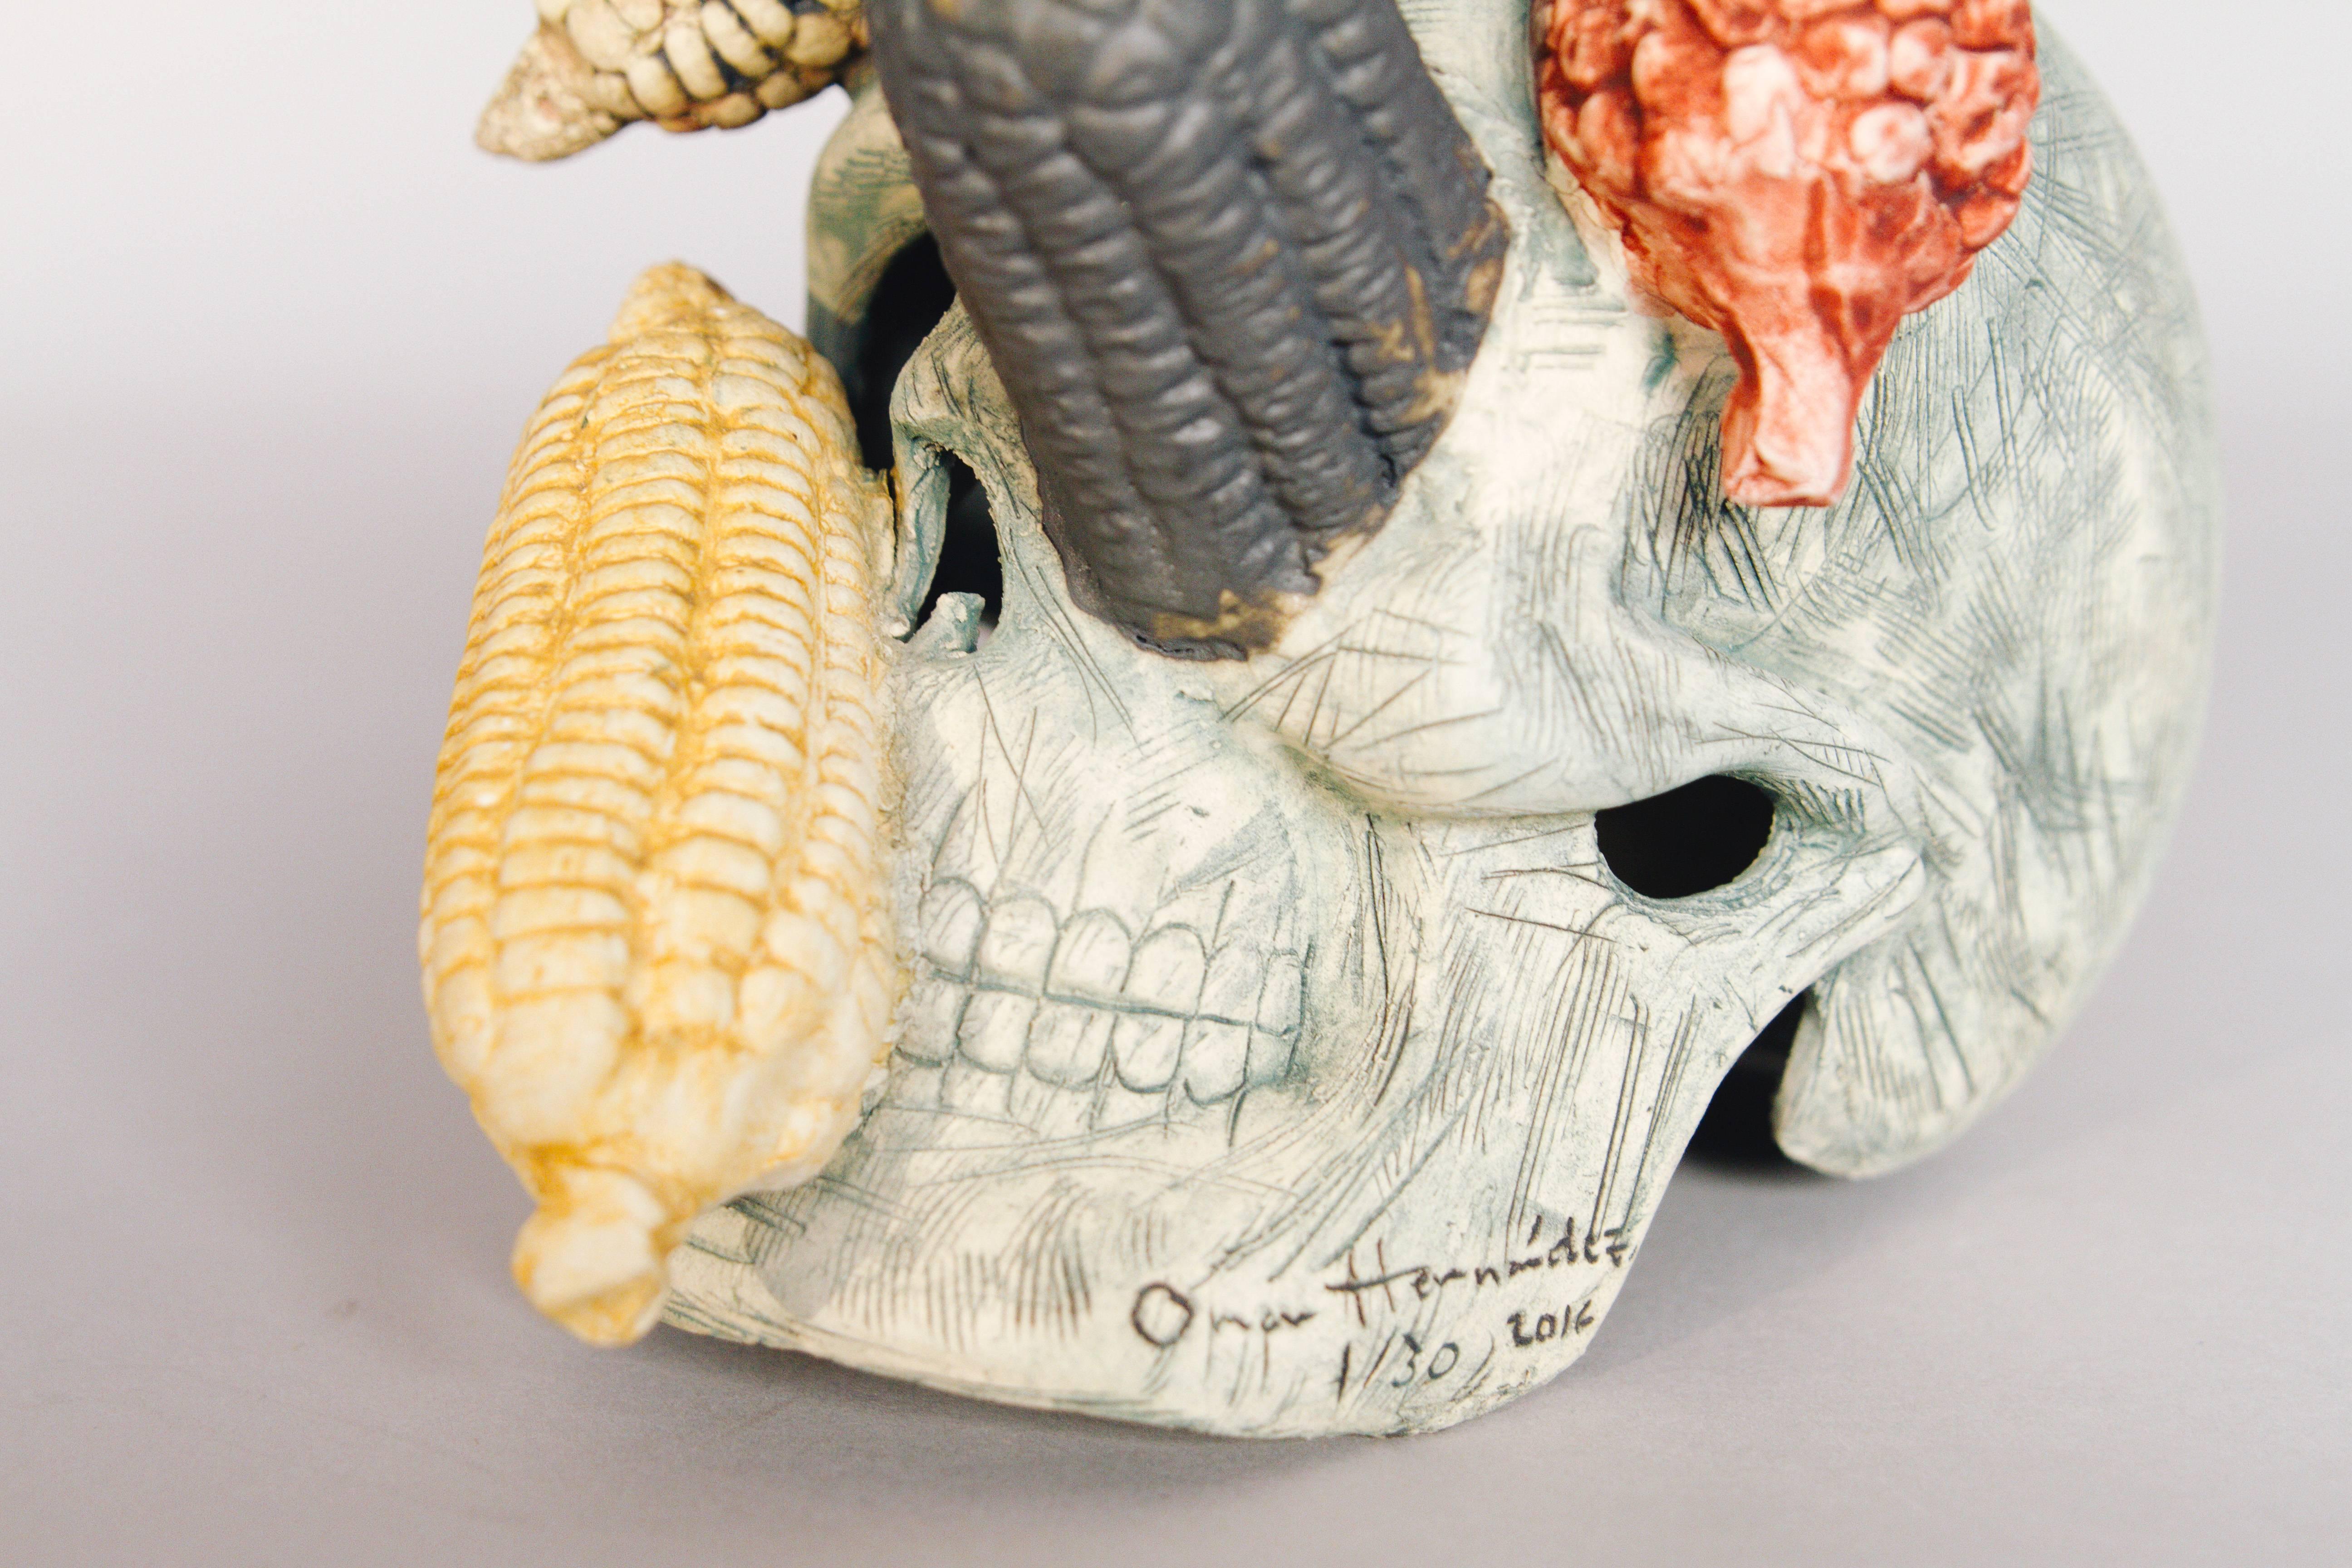 Organic Modern Mexican Ceramic Corn Skull Sculpture Hand Crafted Folk Art, Edition 1/30 For Sale